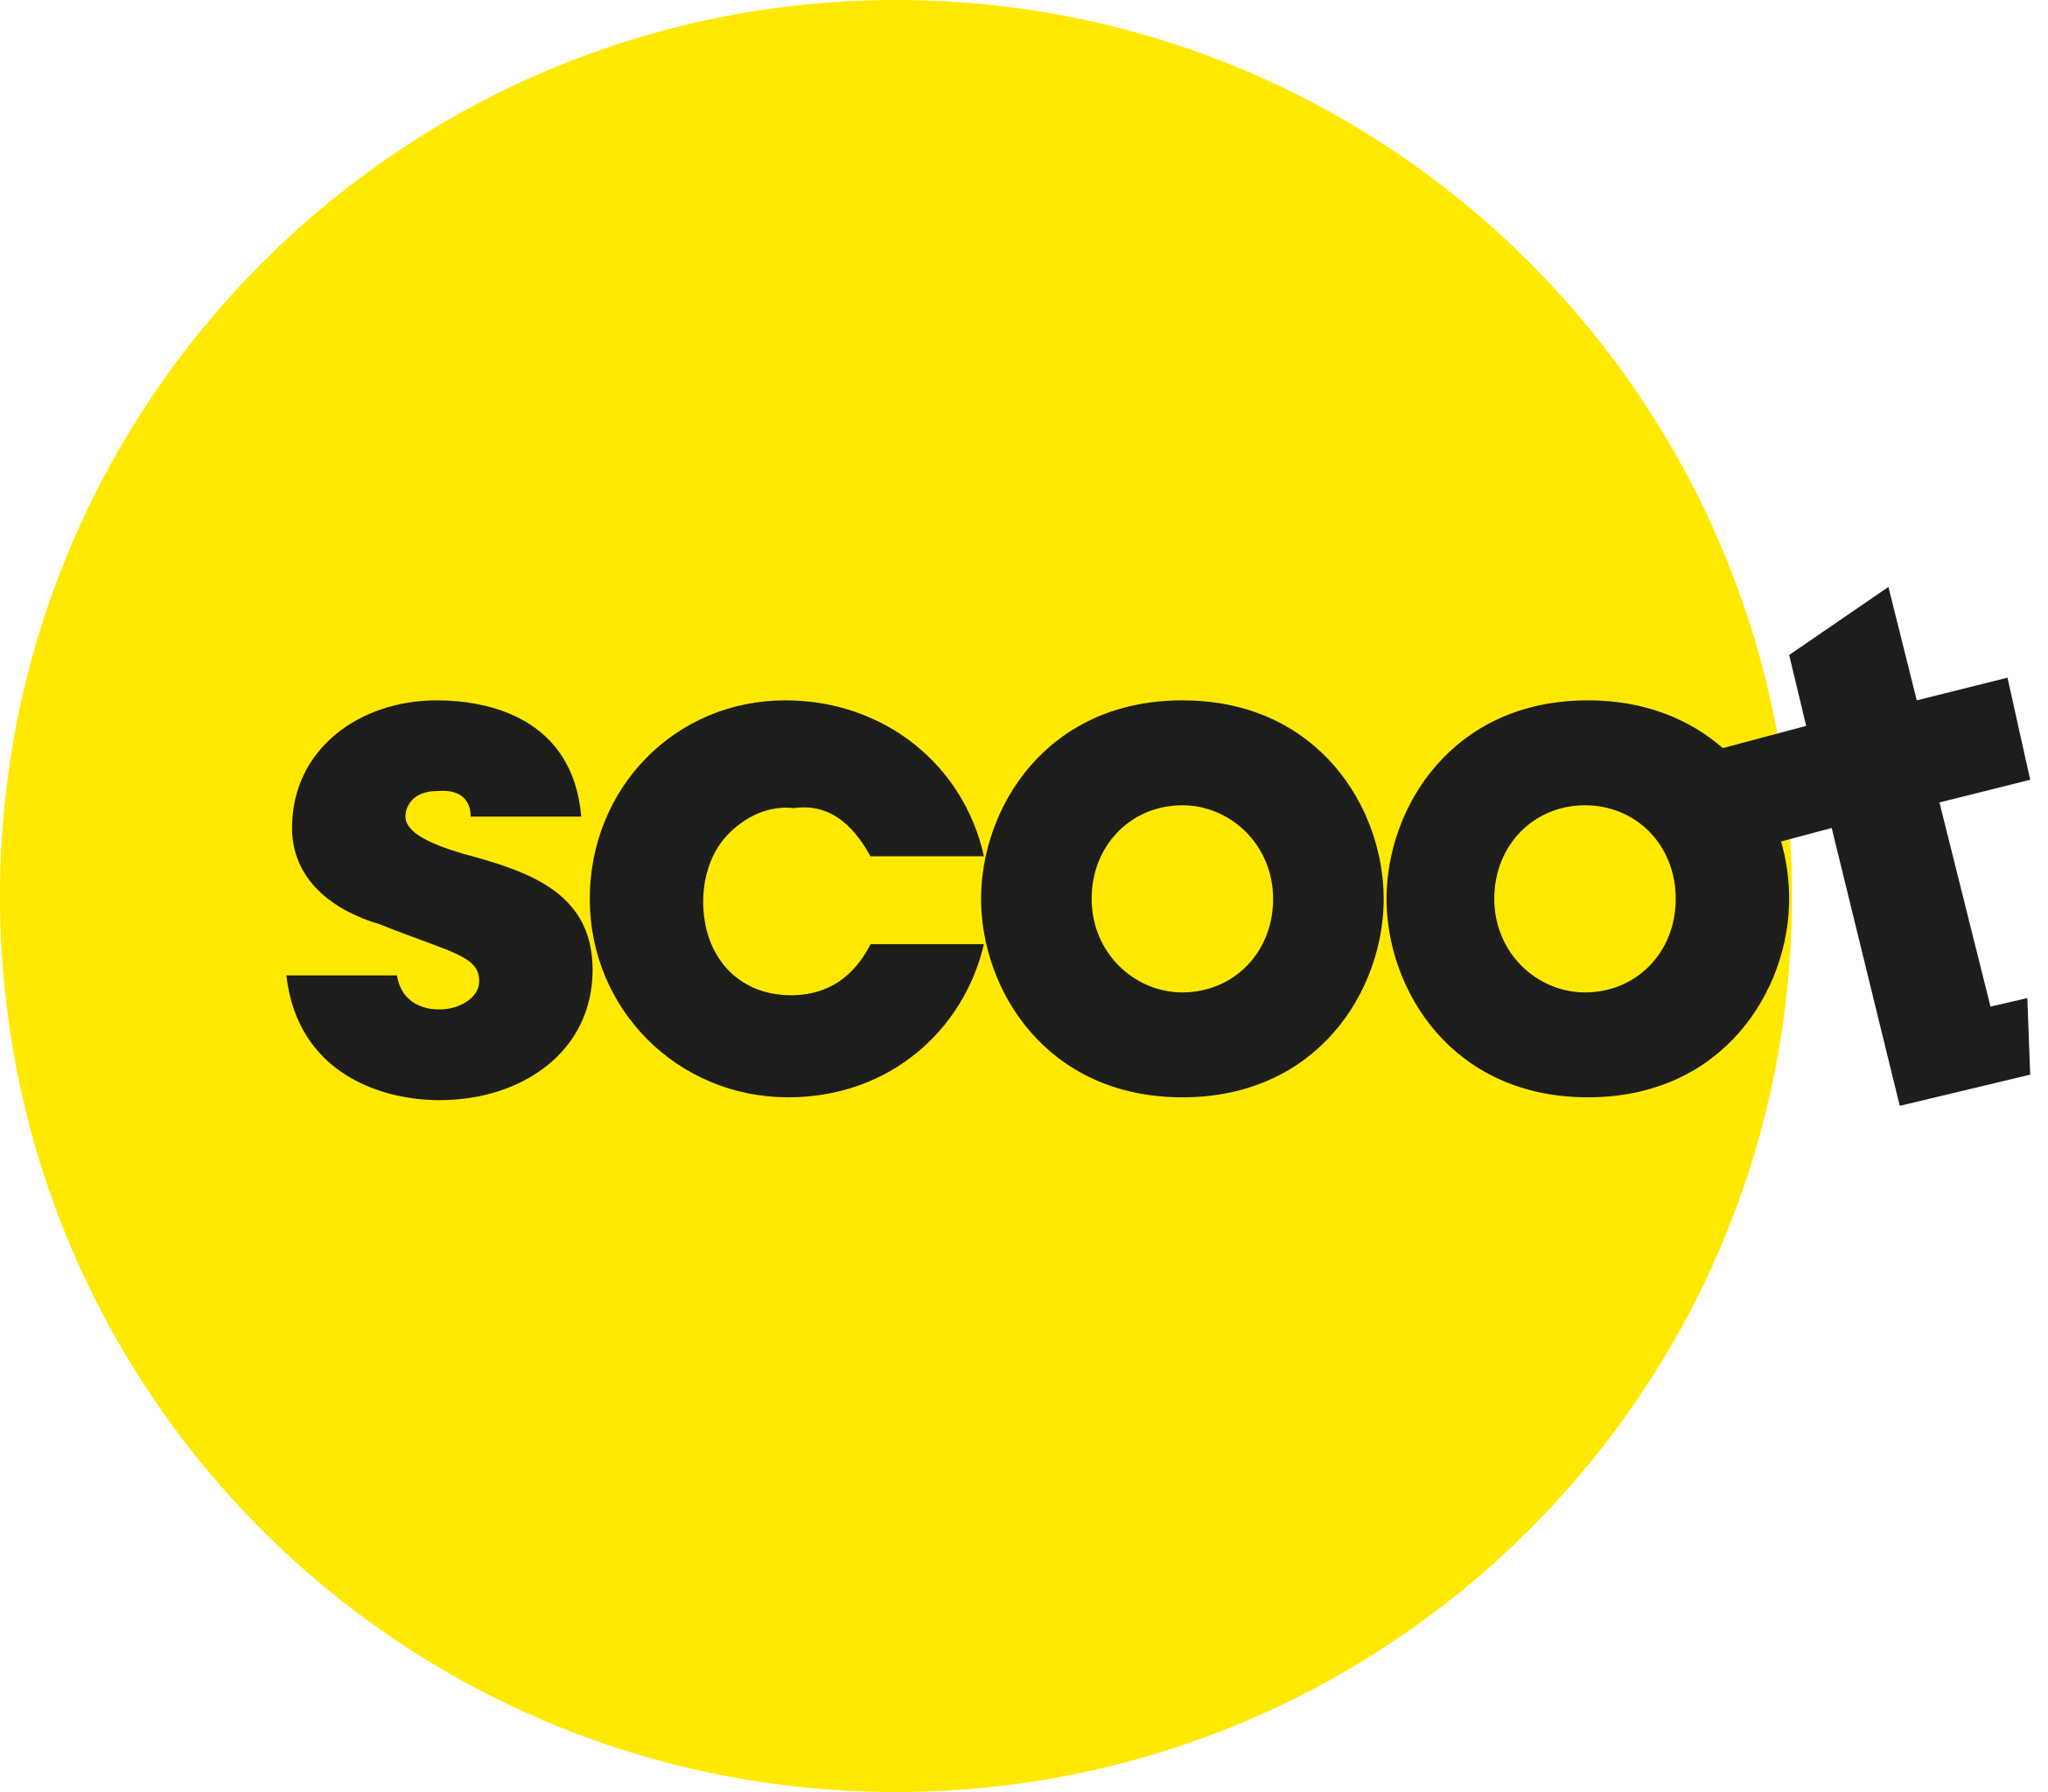 Scoot_logo.svg